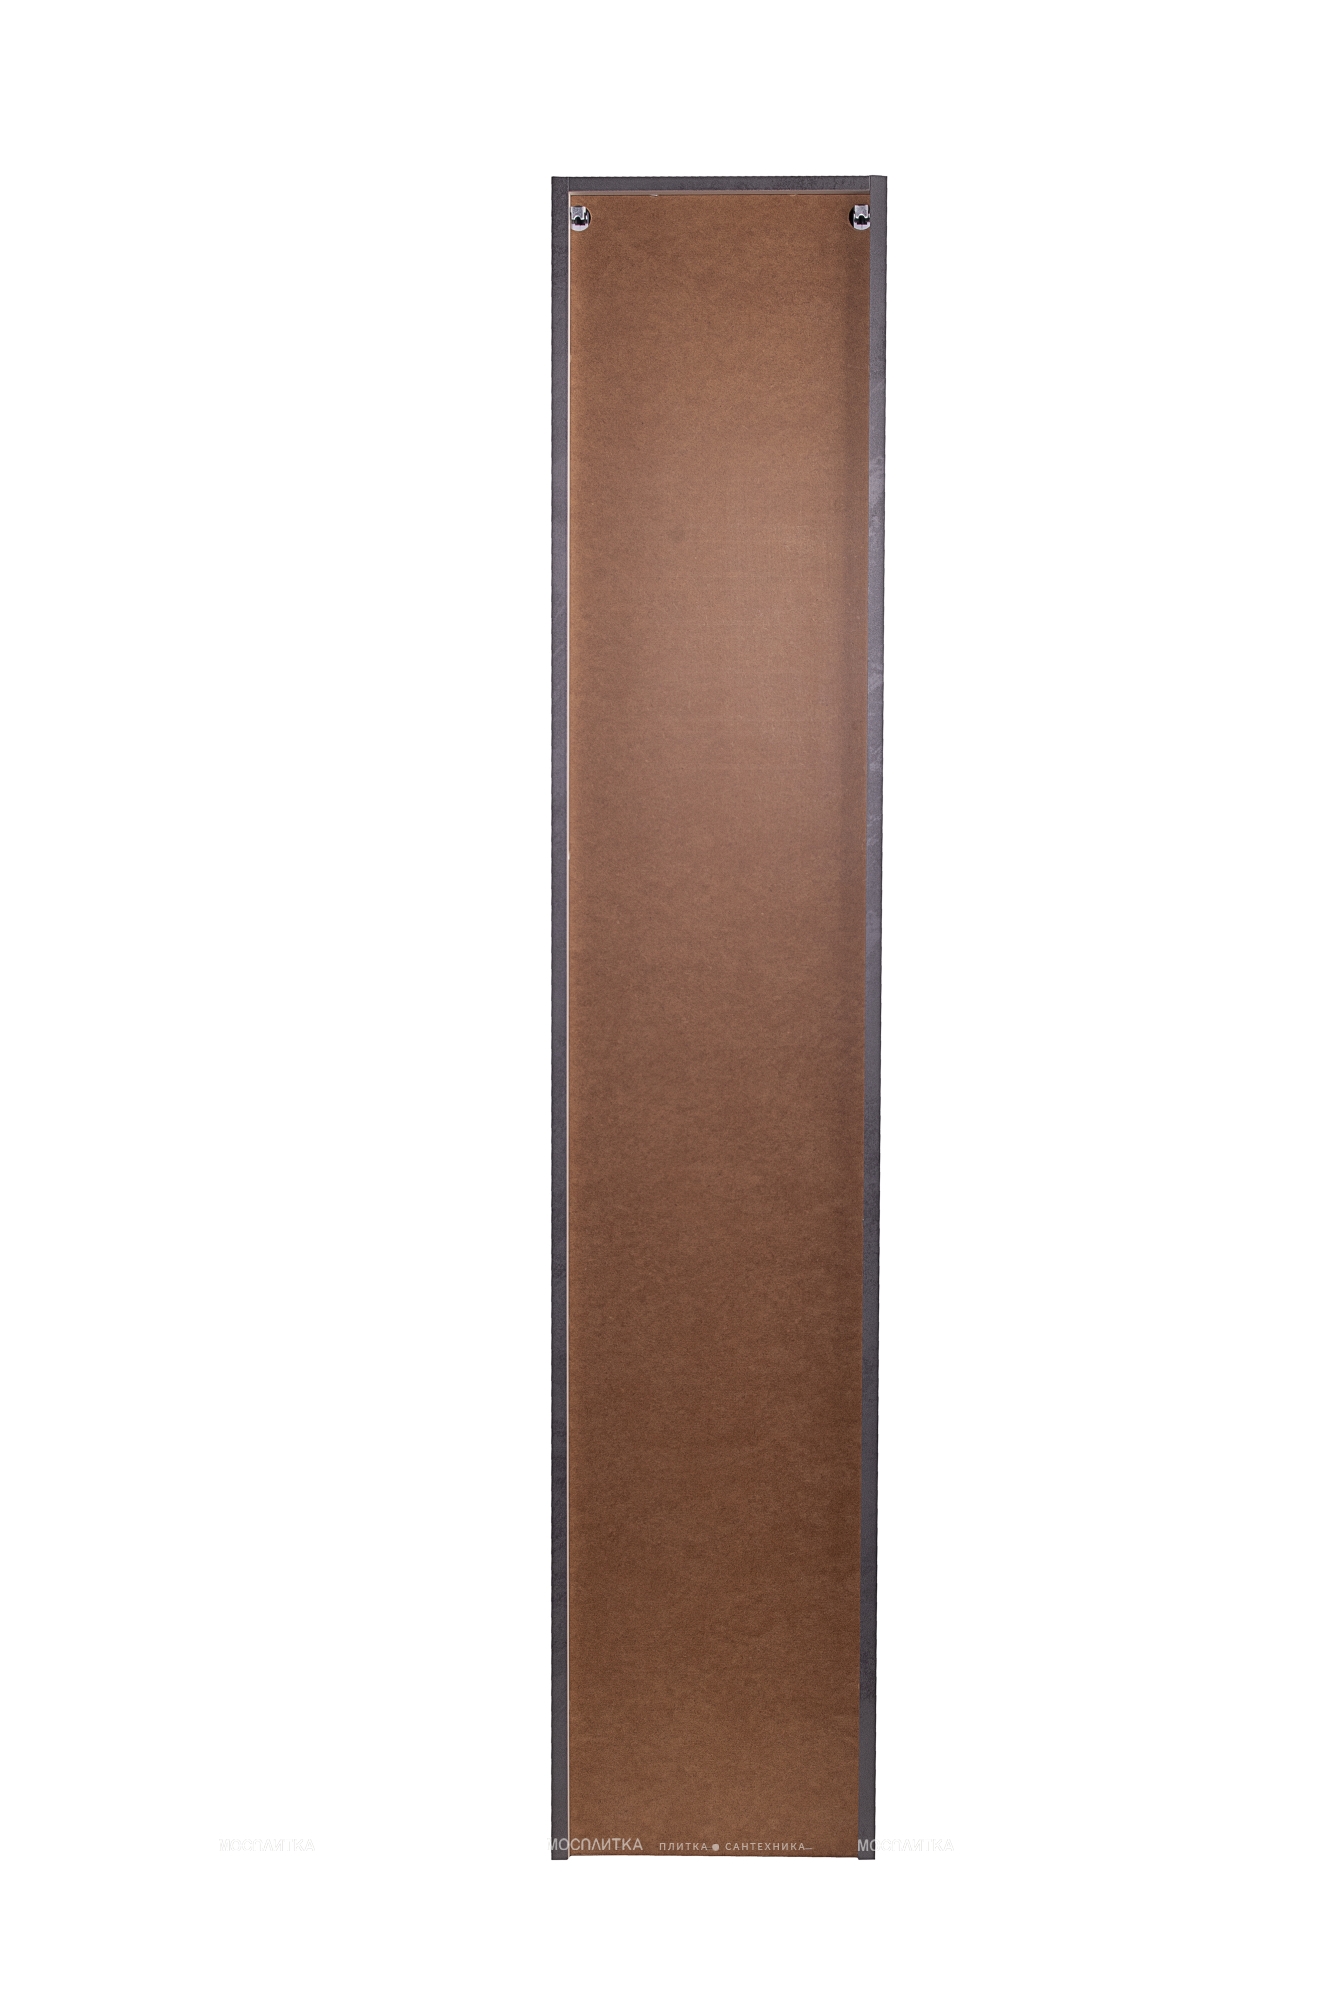 Шкаф-пенал Style Line Атлантика 35 см СС-00002284 бетон темный - изображение 10